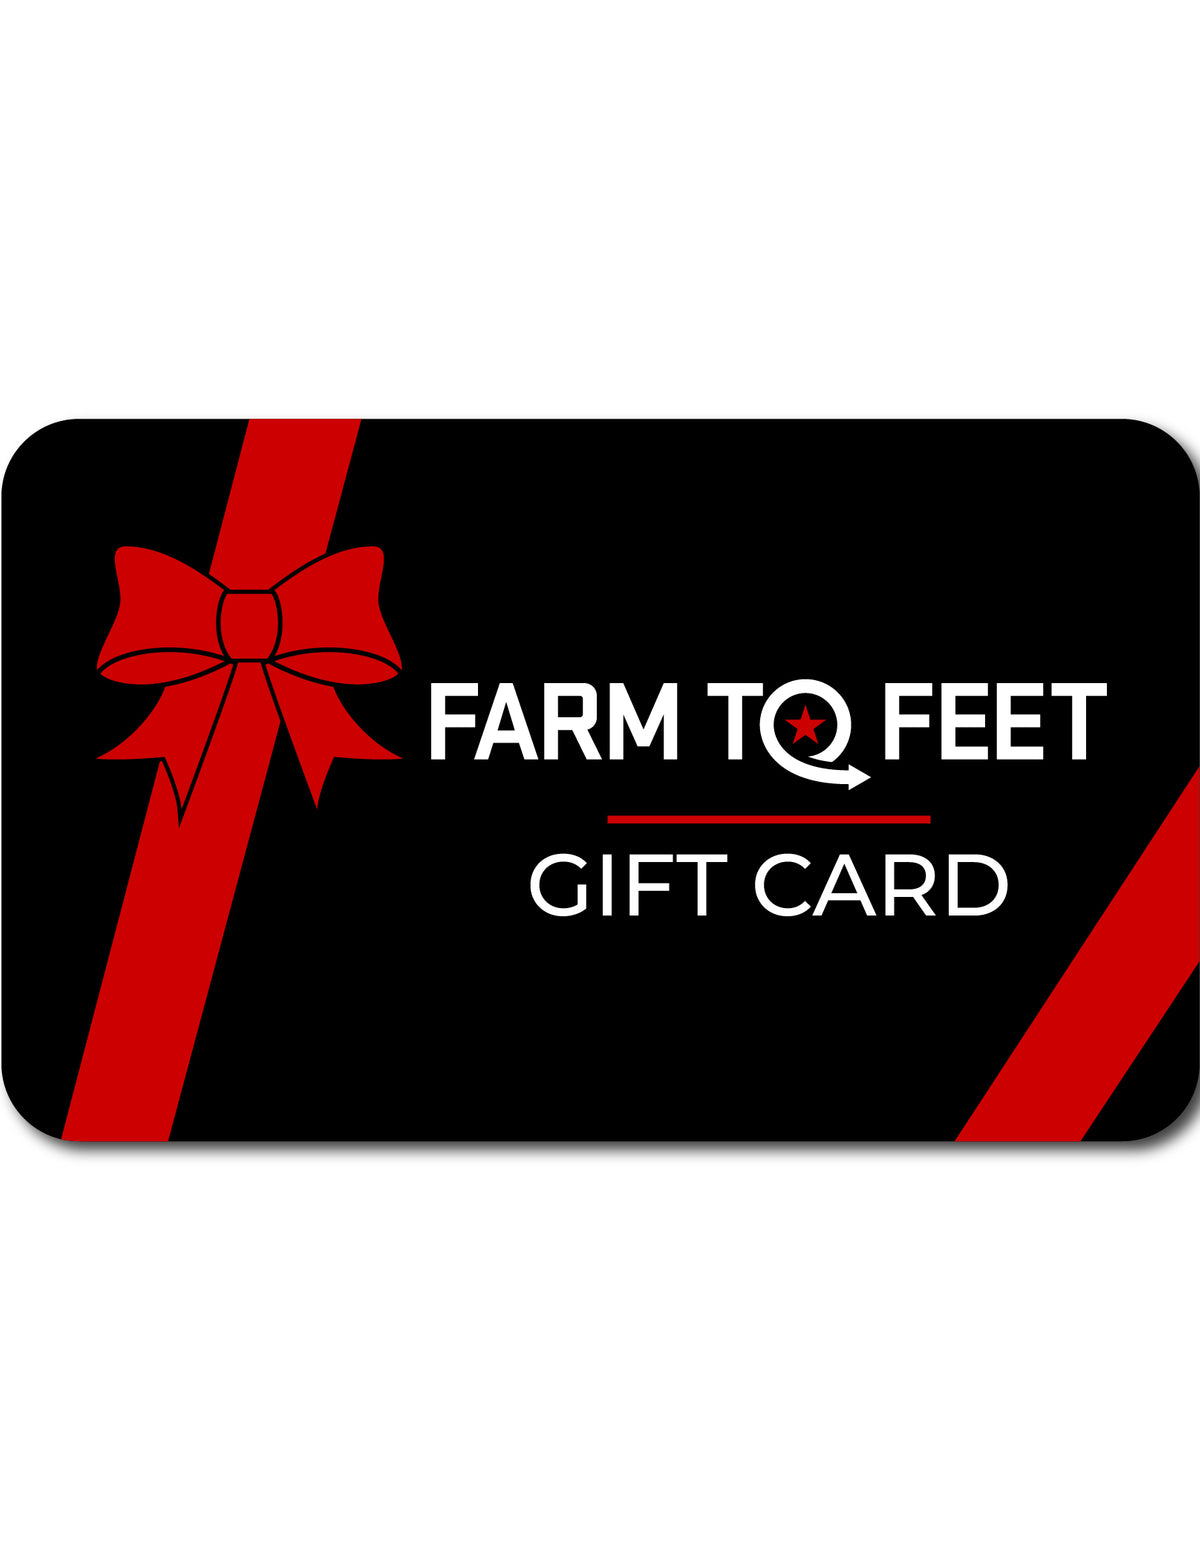 Farm to Feet Gift Card Image